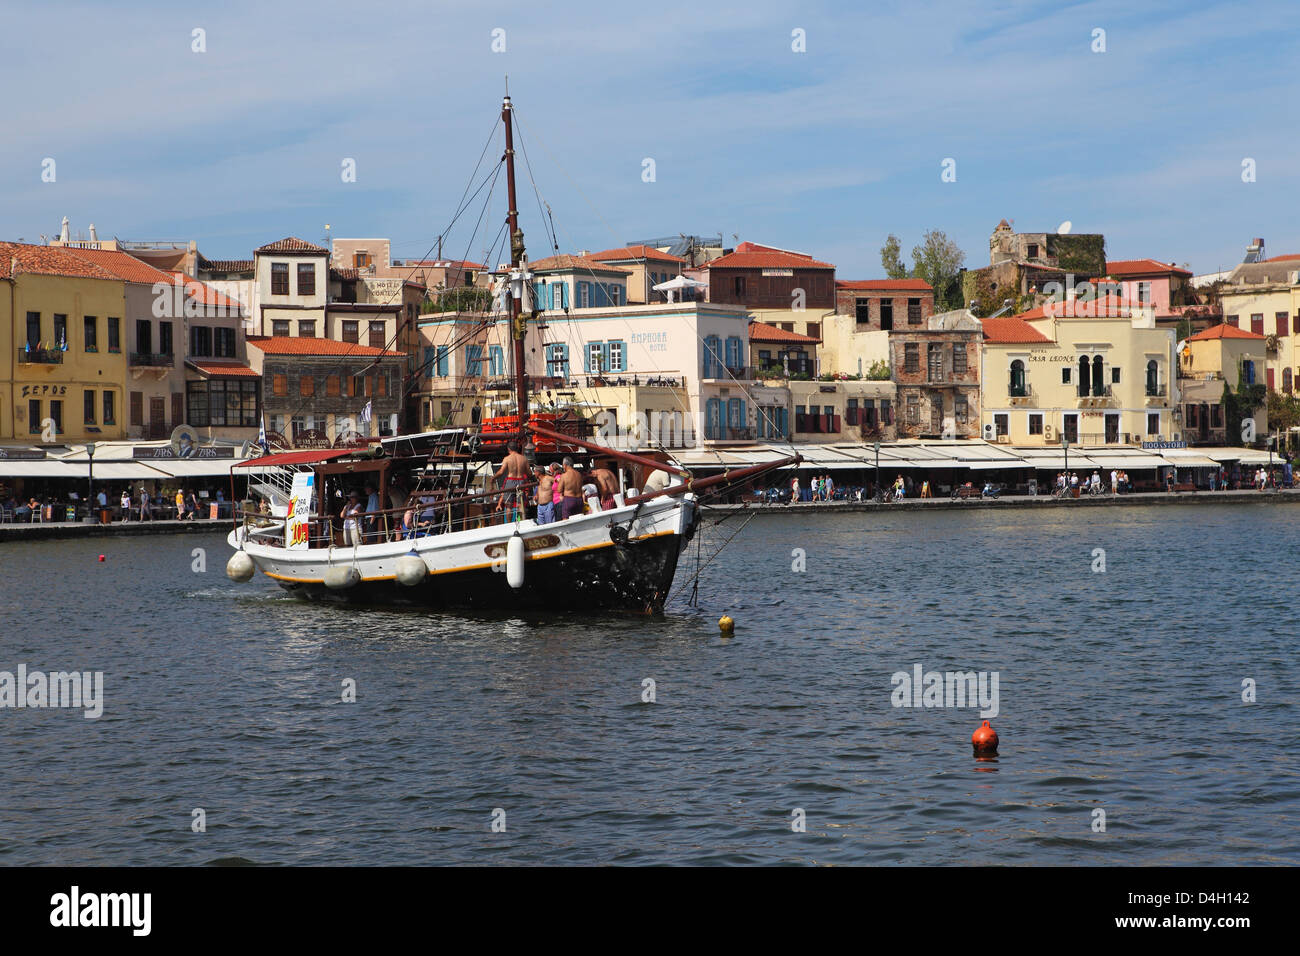 A traditional Cretan boat in the Venetian era harbour at the Mediterranean port of Chania (Canea), Crete, Greek Islands, Greece Stock Photo